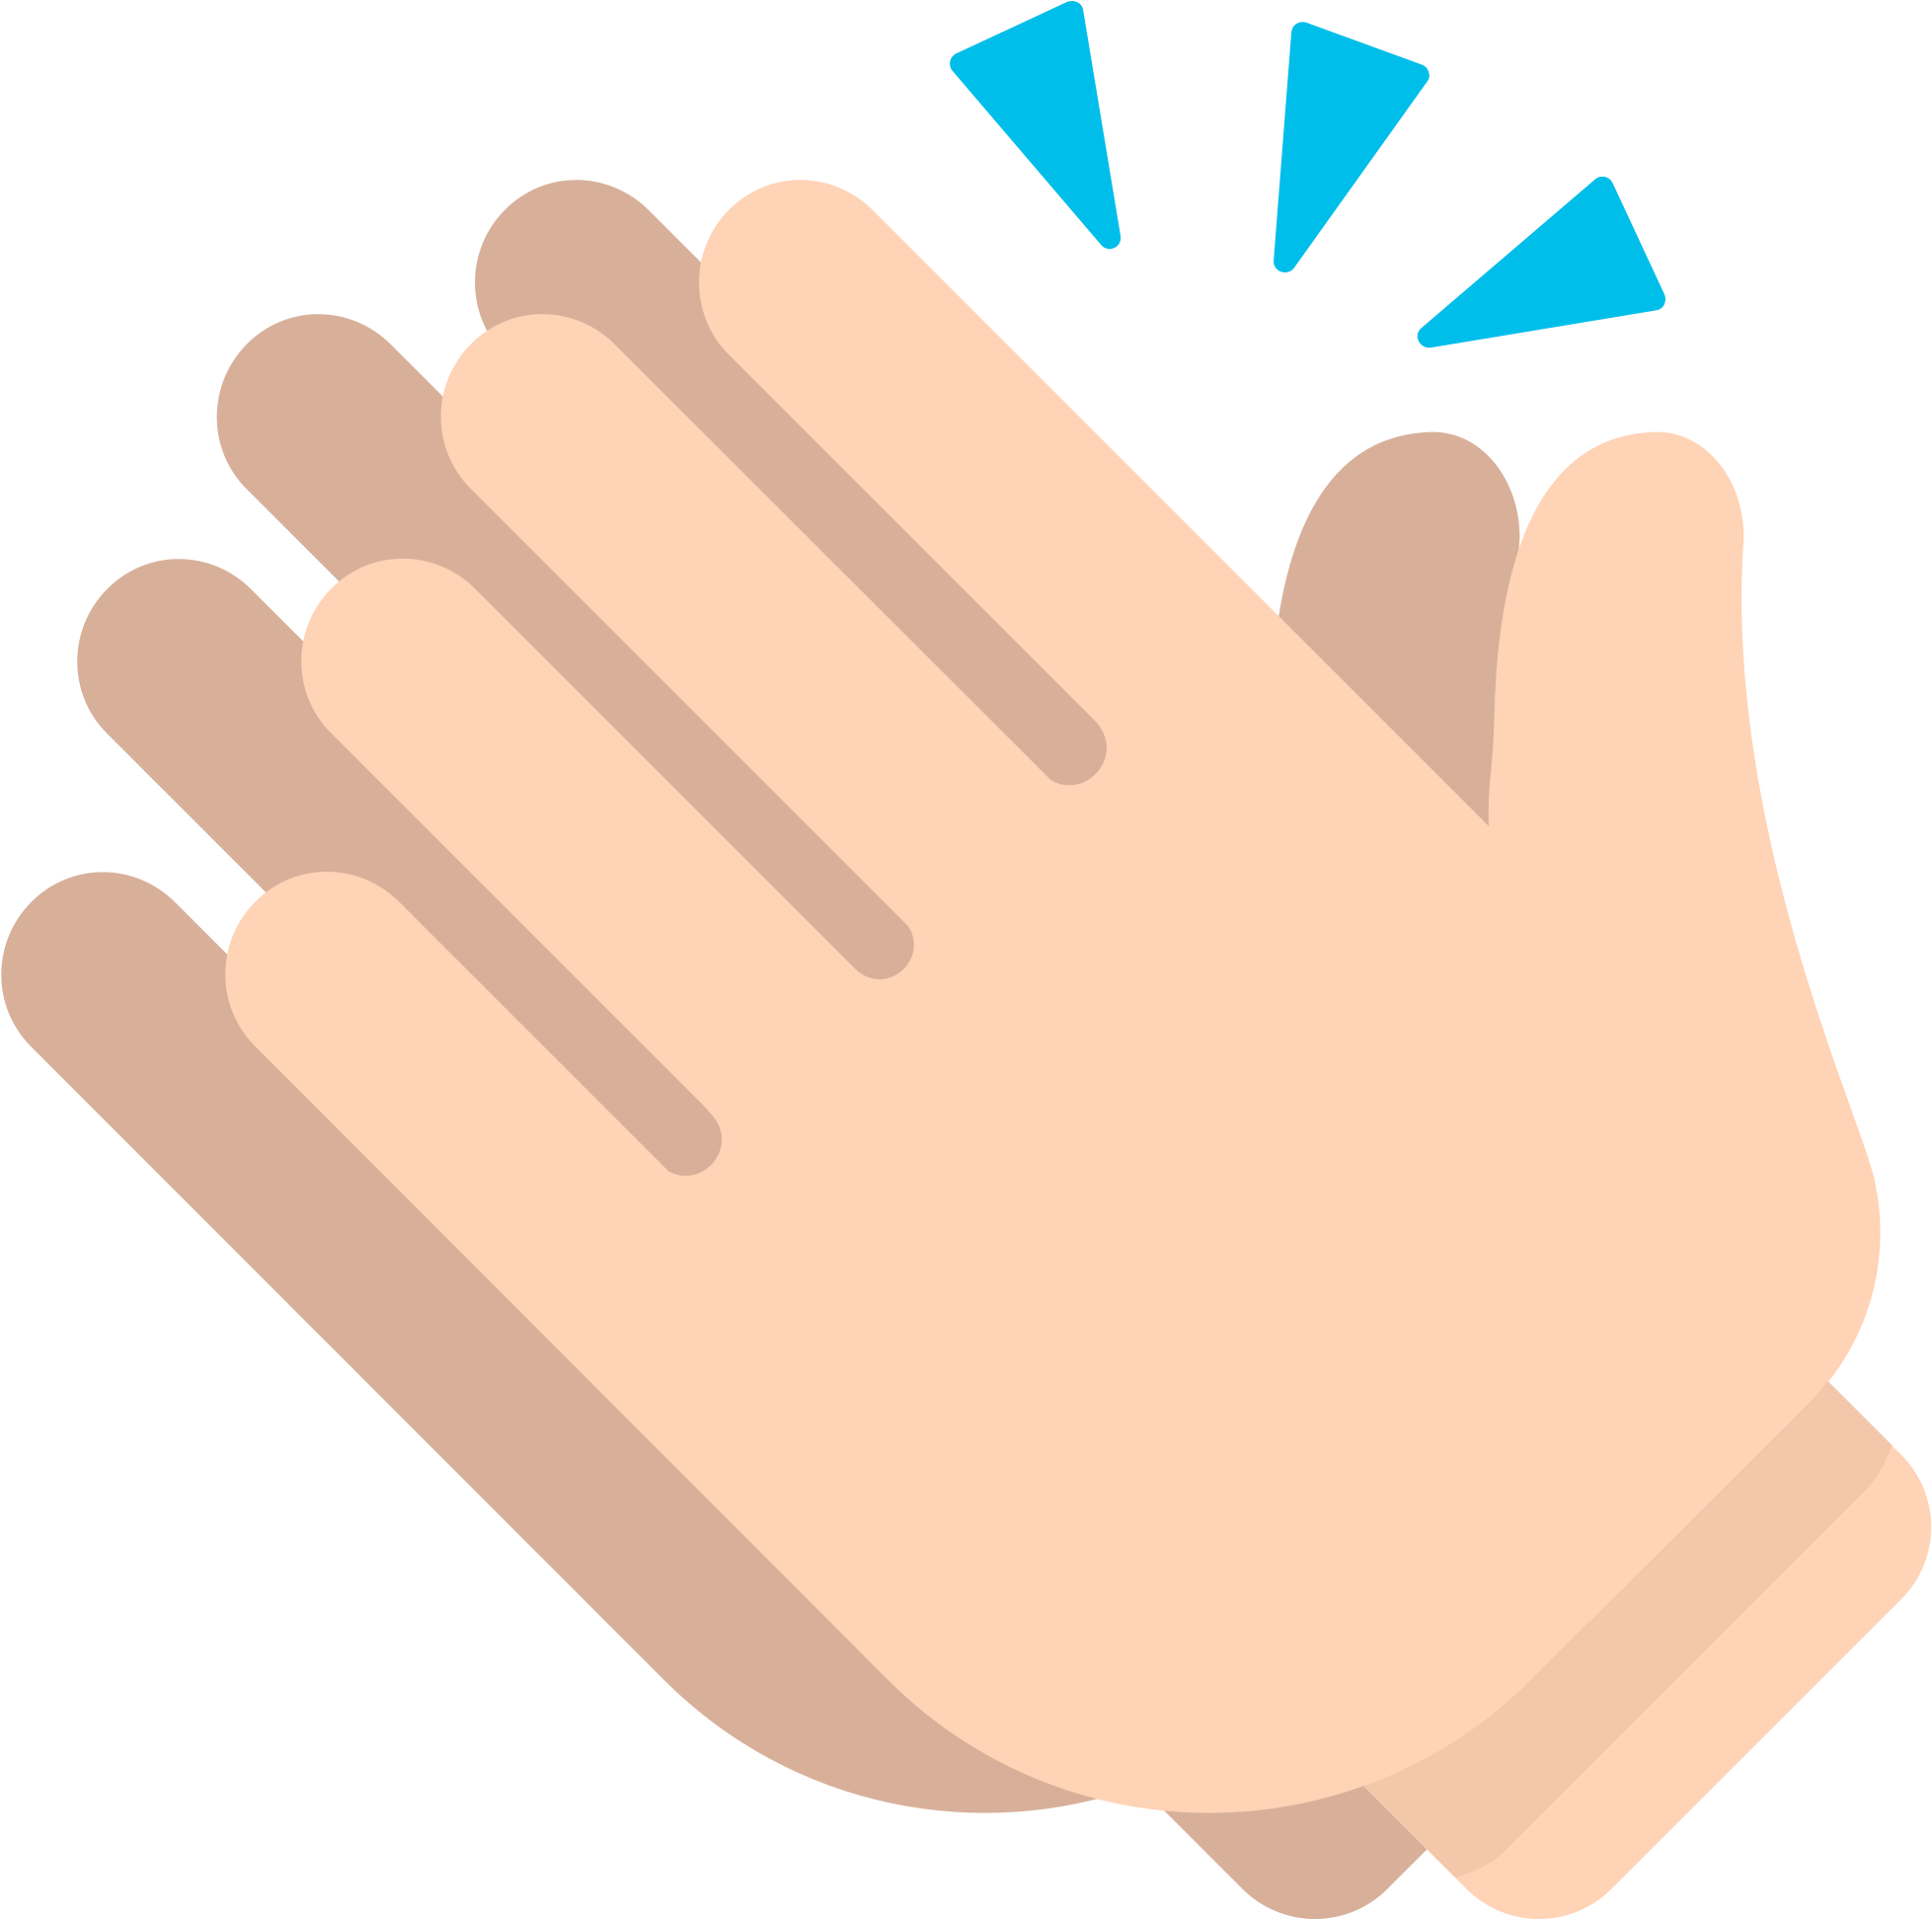 Clapping_ Hands_ Emoji_ Illustration.png PNG image